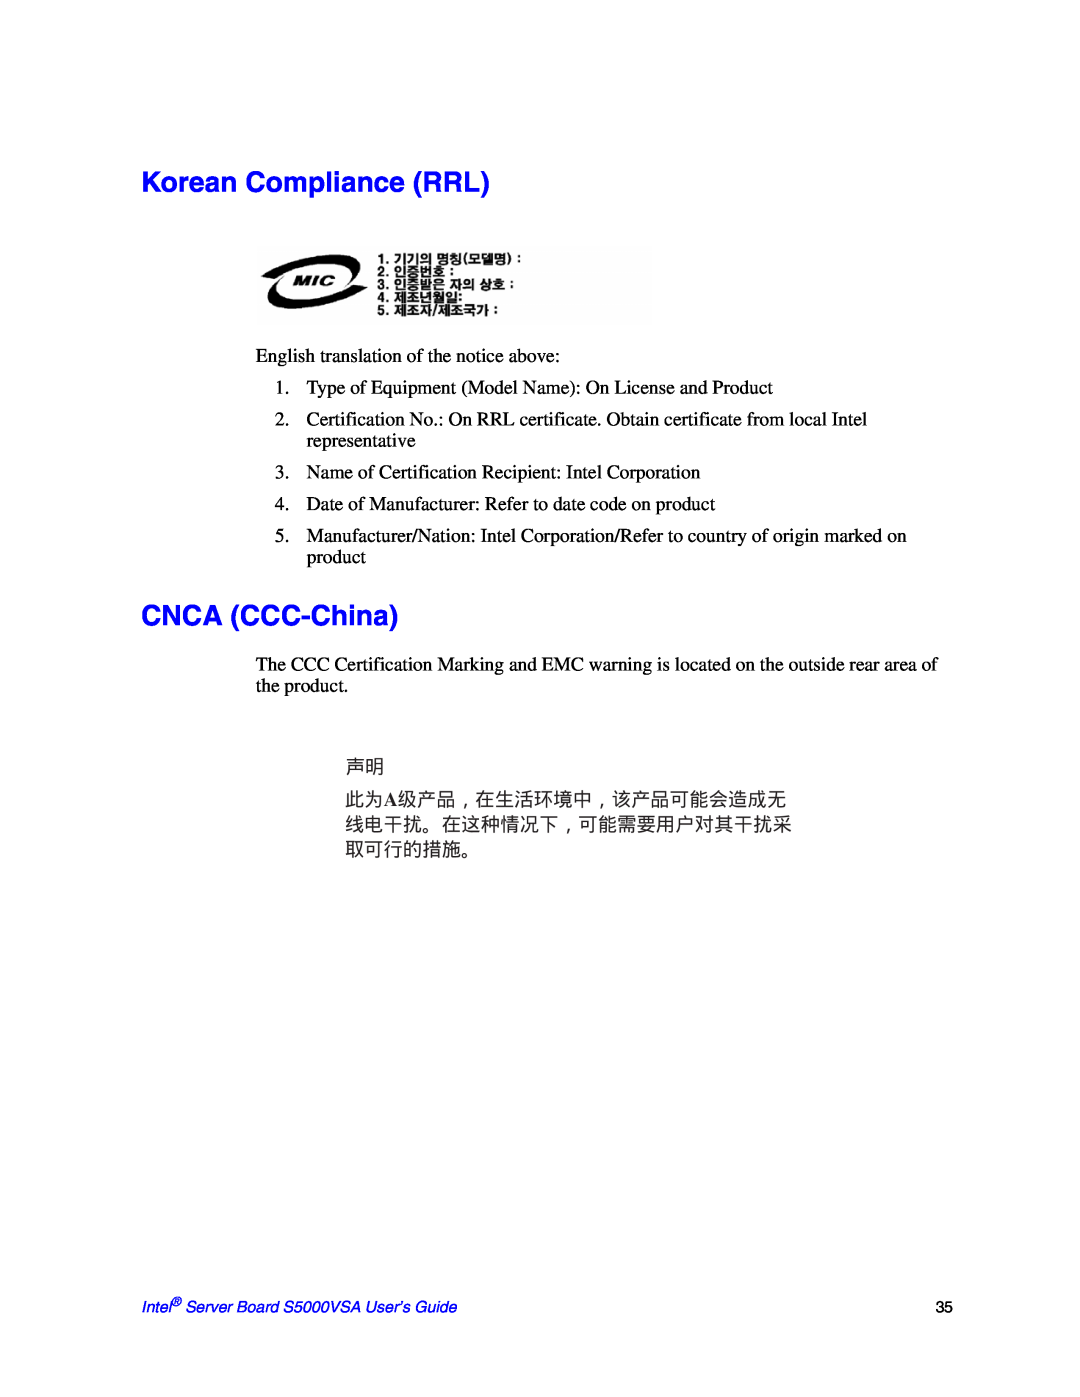 Intel S5000VSA manual Korean Compliance RRL, CNCA CCC-China 